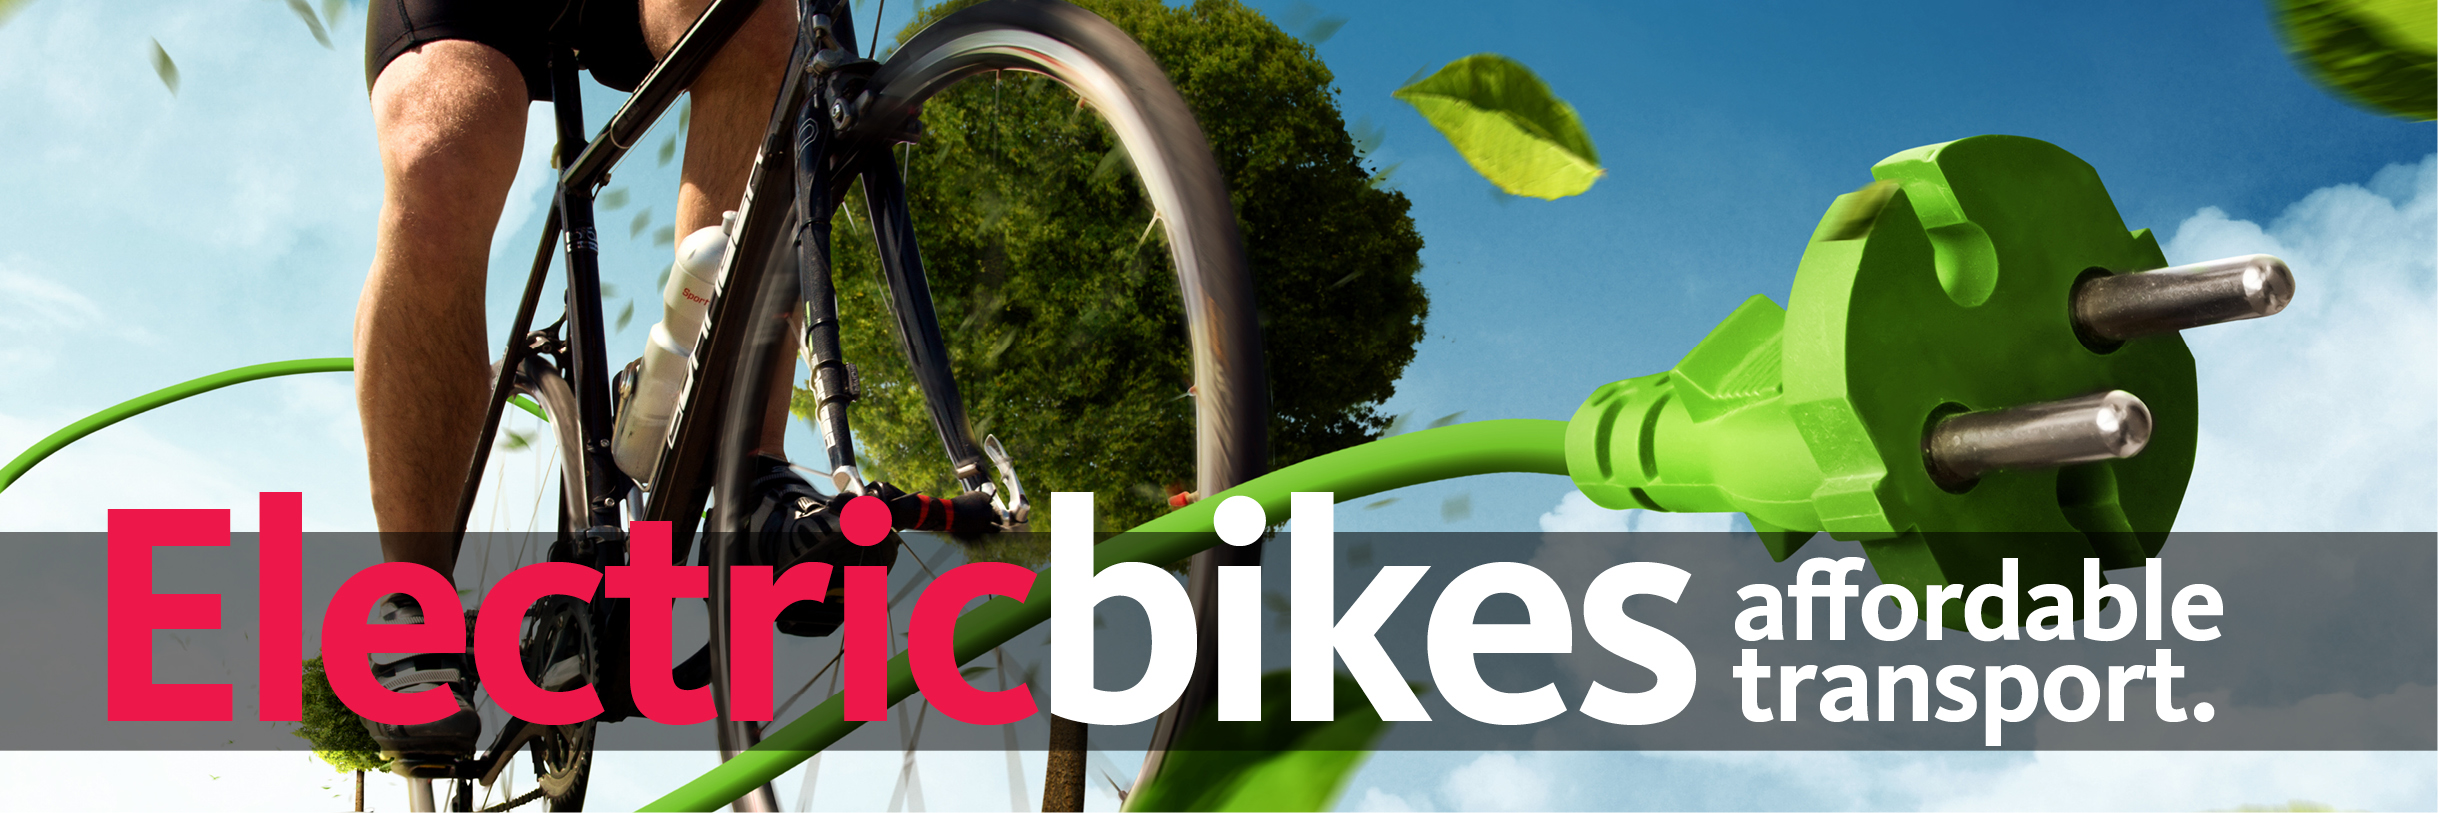 Electric bikes, affordable transportation.